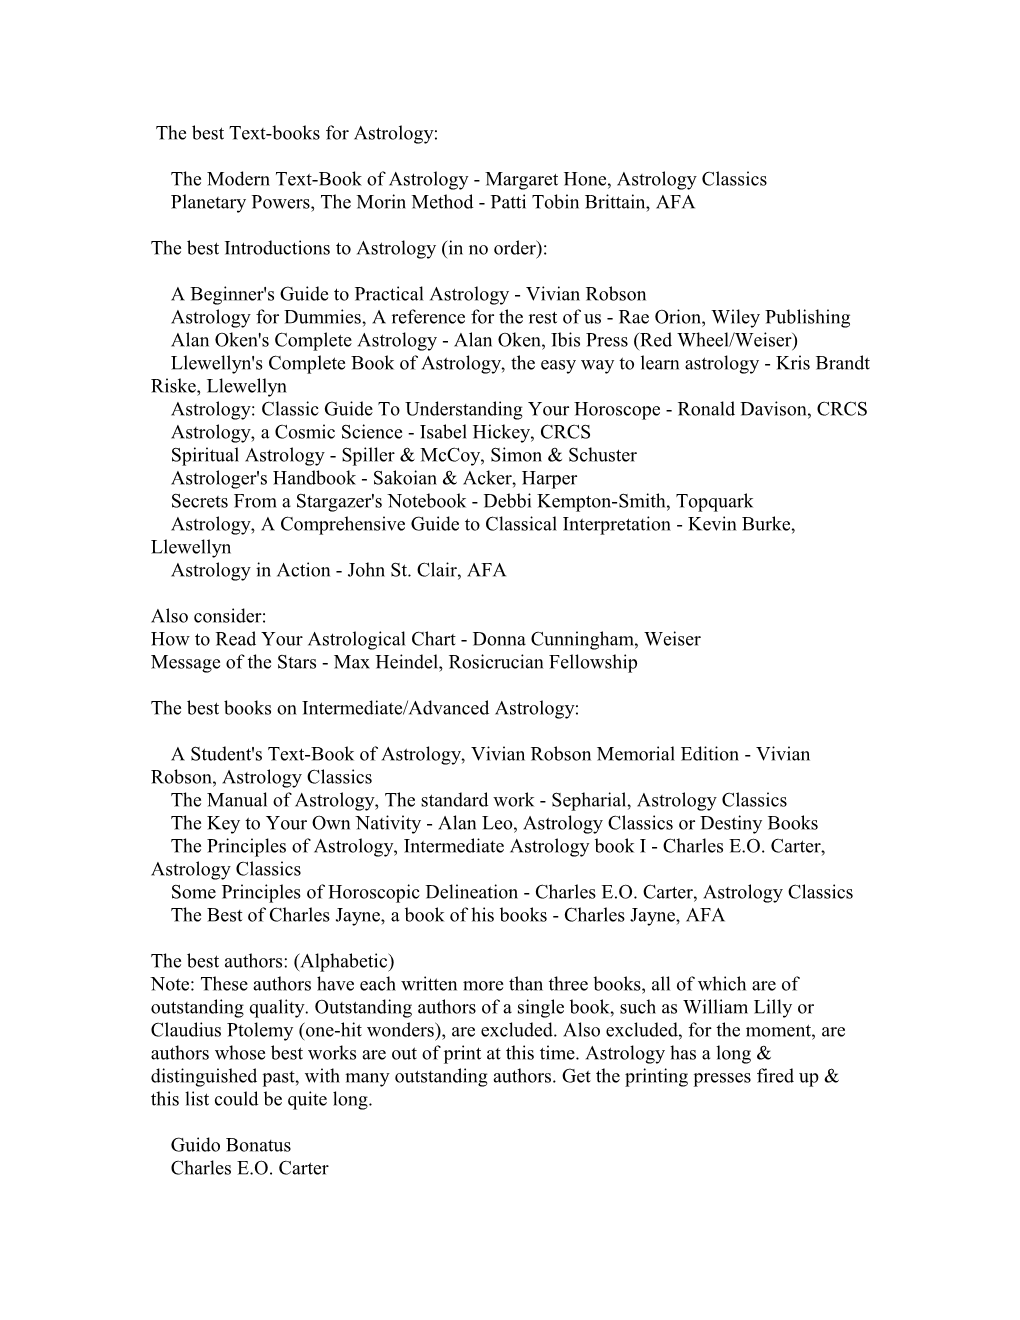 The Modern Text-Book of Astrology - Margaret Hone, Astrology Classics Planetary Powers, the Morin Method - Patti Tobin Brittain, AFA